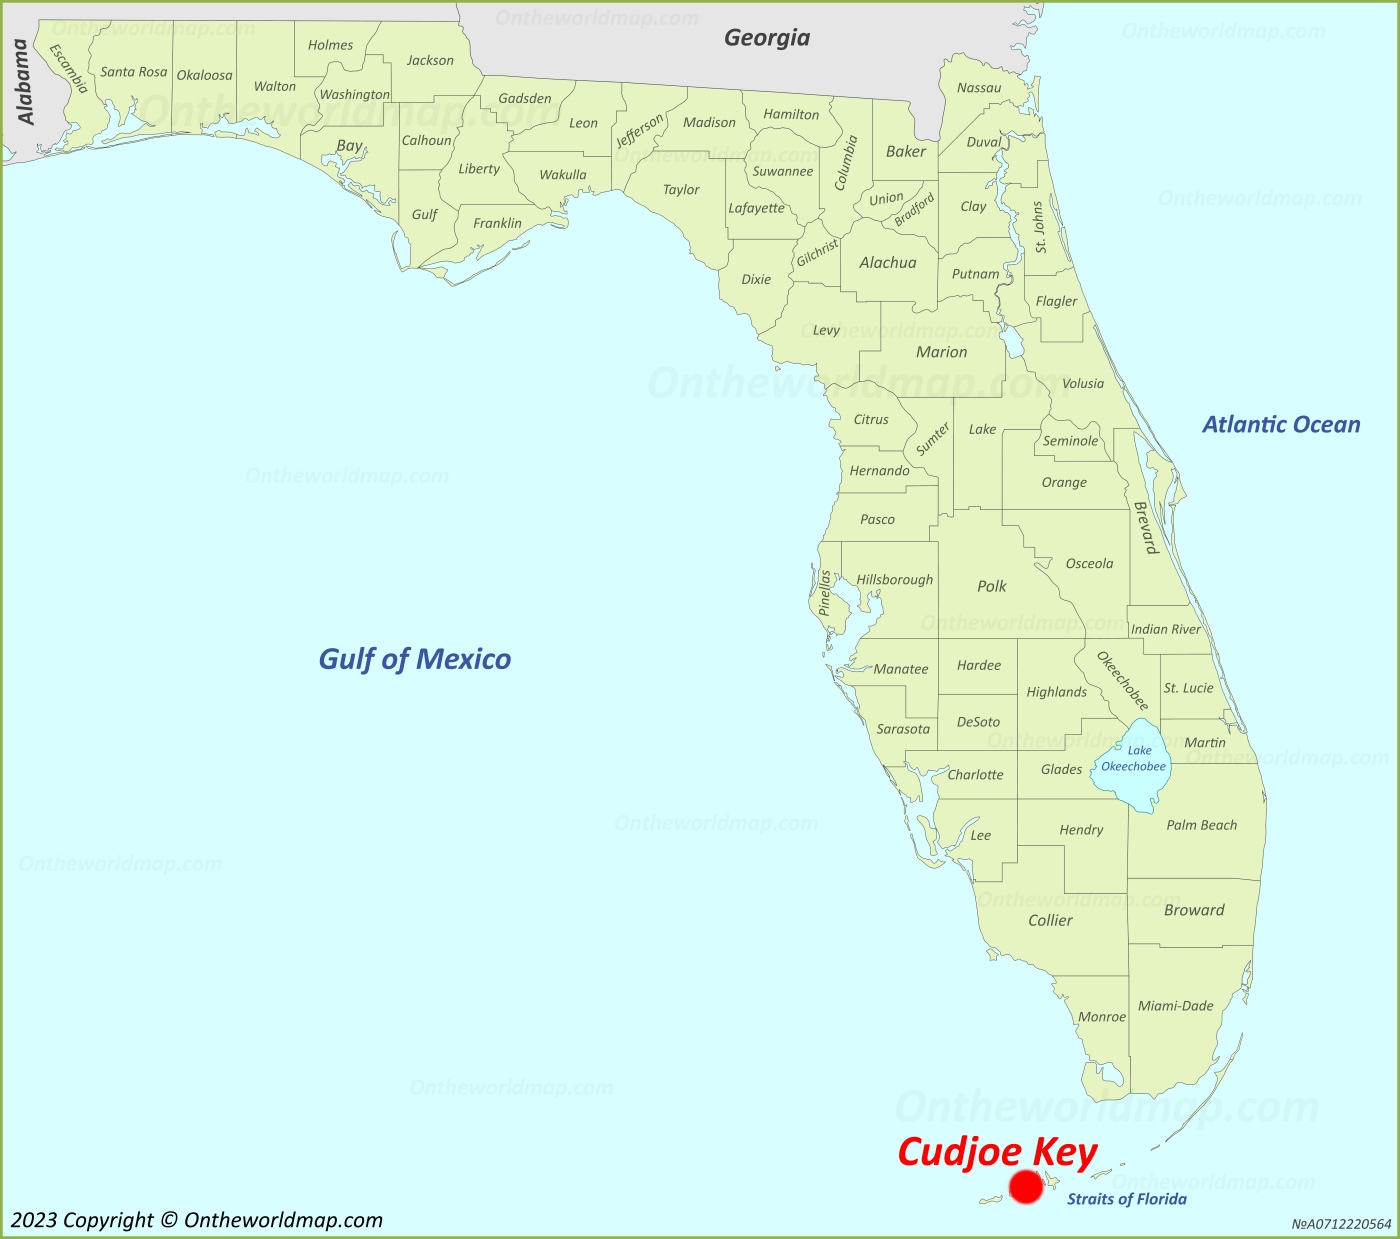 Cudjoe Key Location On The Florida Map